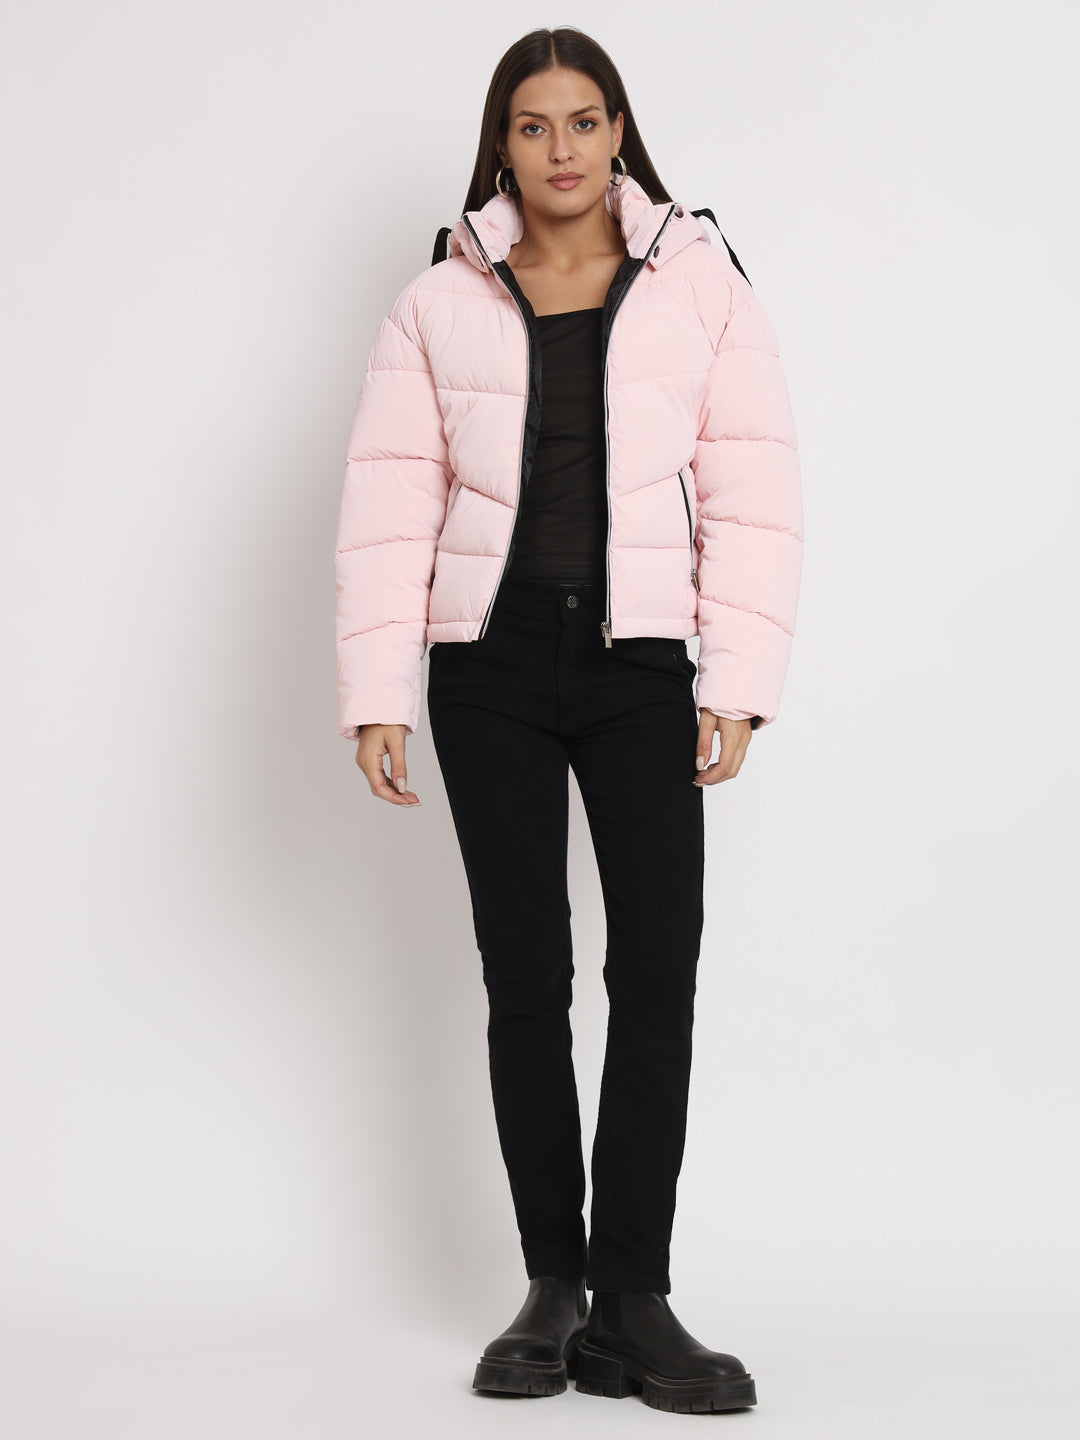 Light Pink Hooded Puffer Jacket